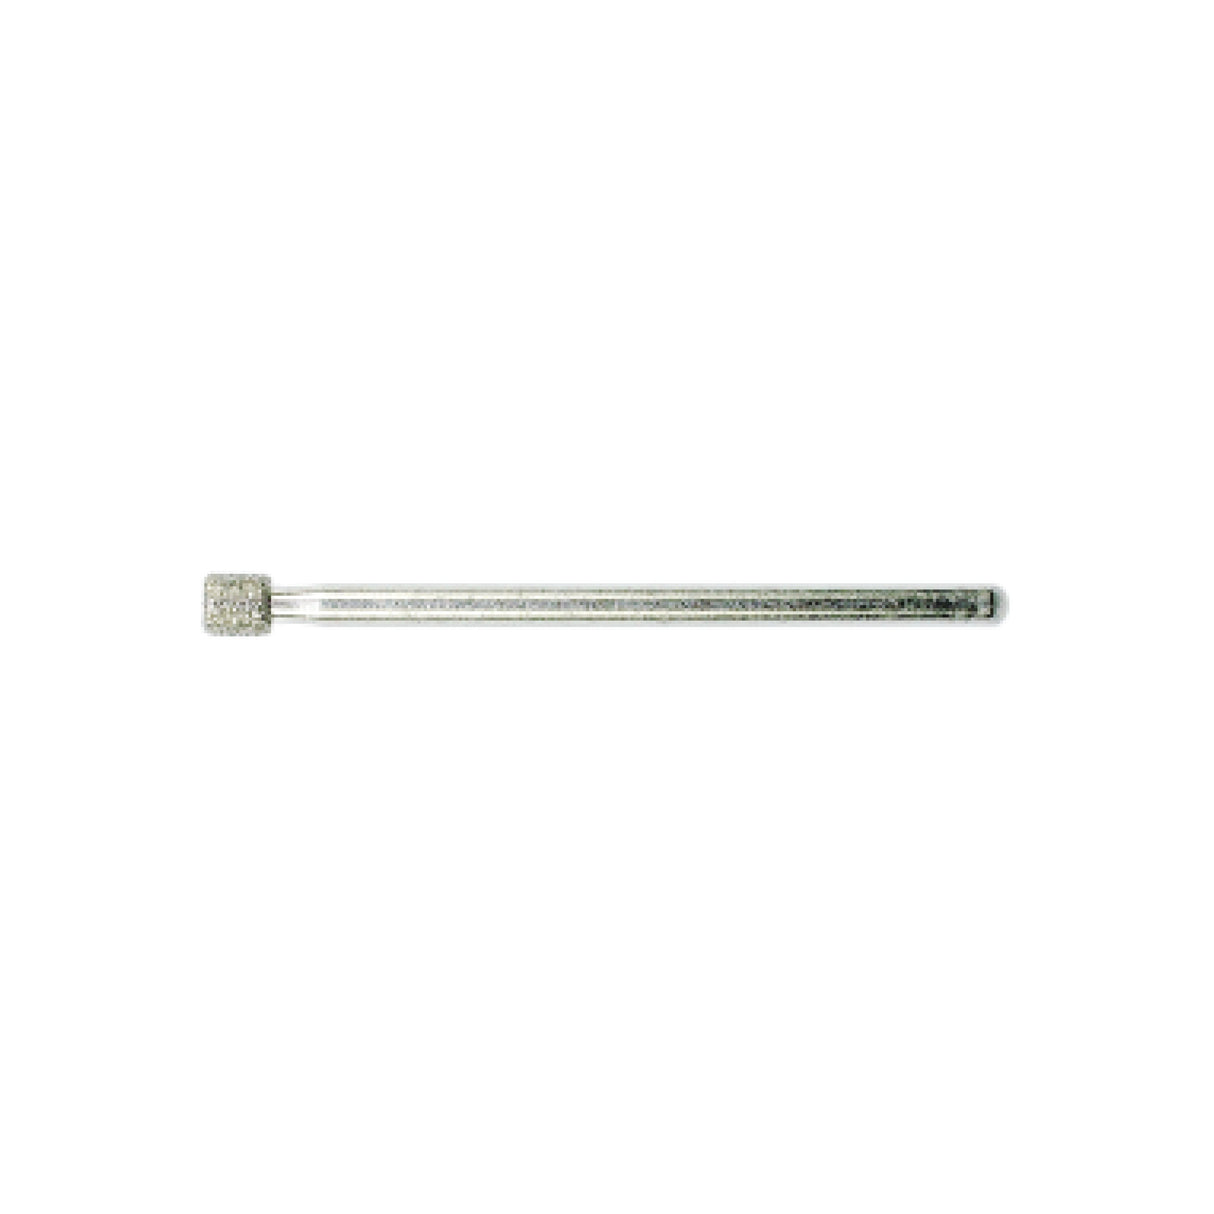 Diamond milling cutter, medium coarse - cylinder U/min 50,000, length 3.5mm, Ø3.5mm